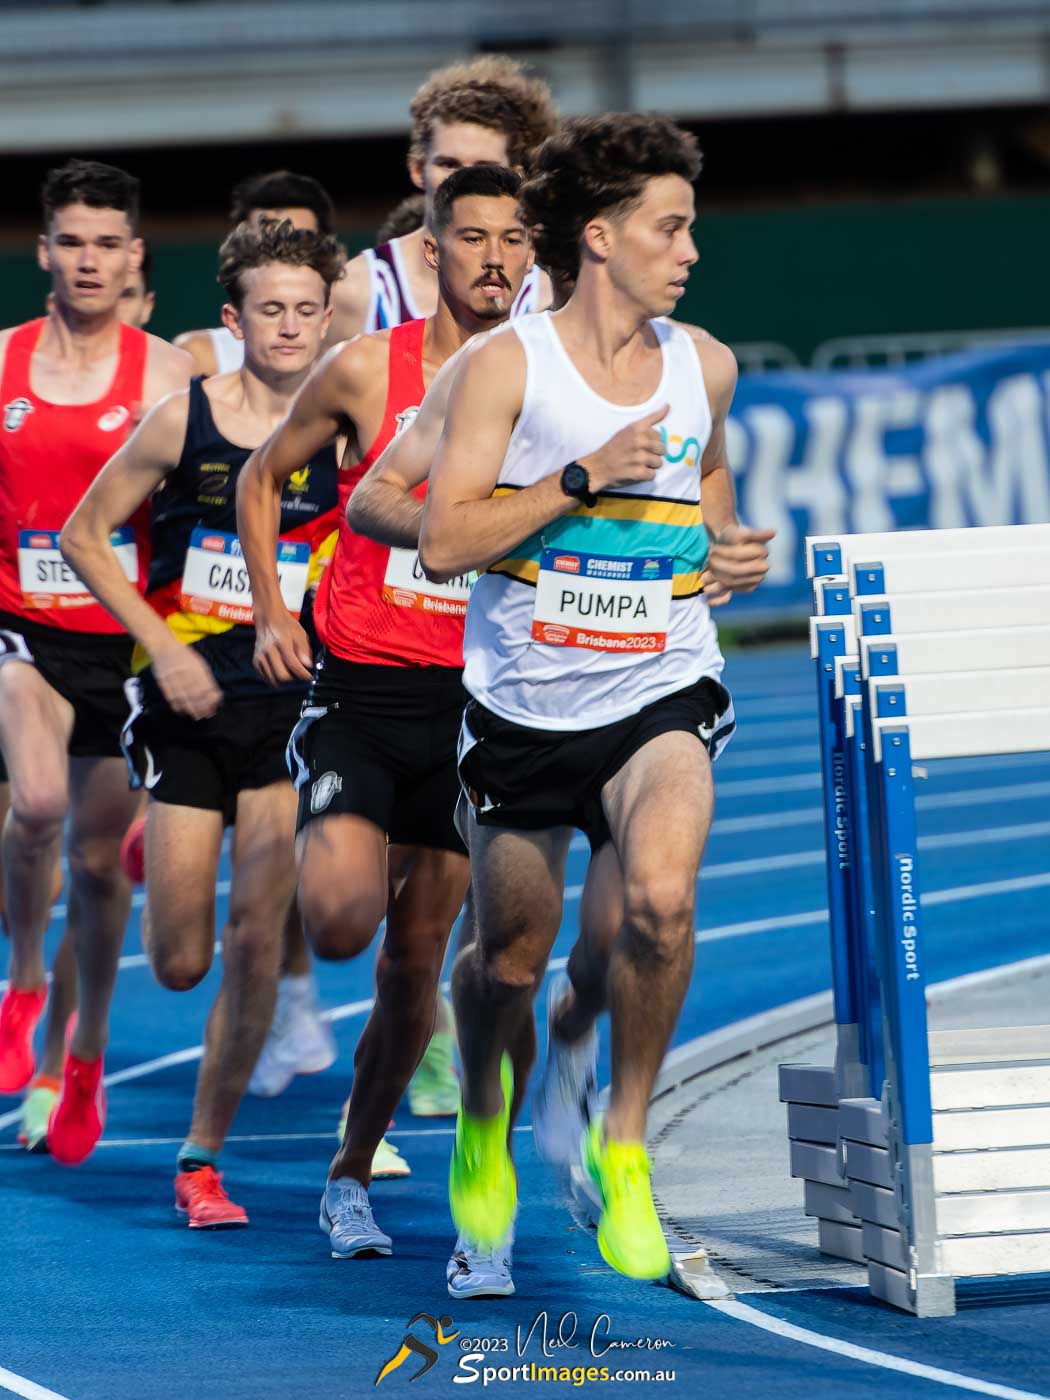 Flynn Pumpa paces the Men's 3000m Steeplechase